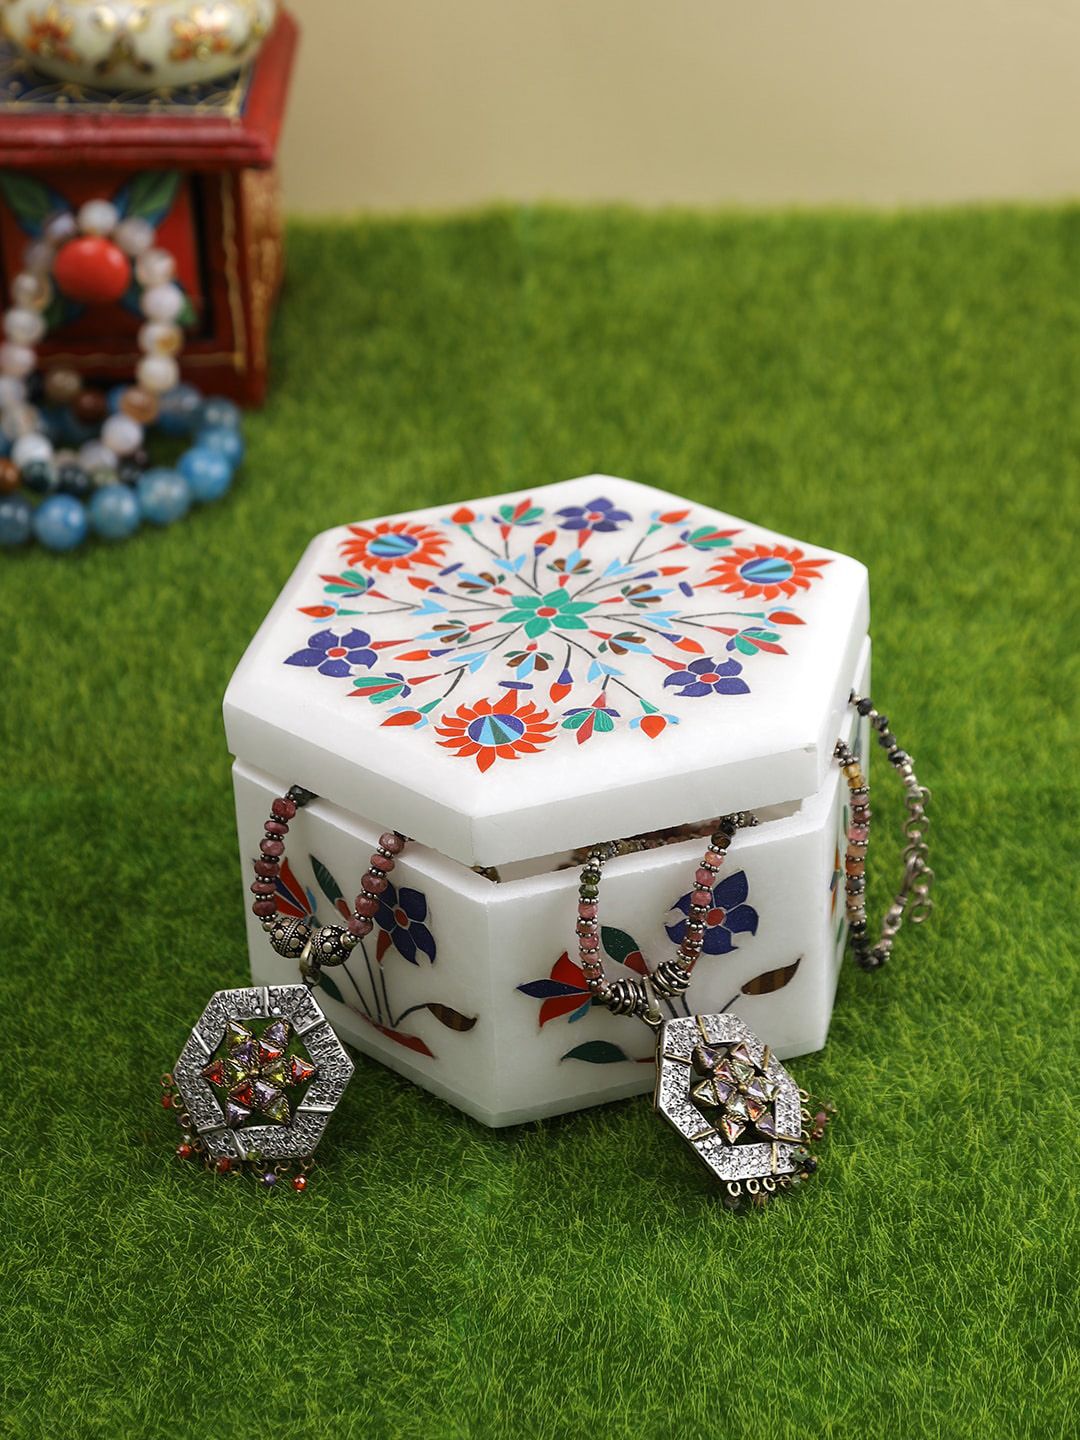 Aapno Rajasthan White & Blue Textured Hexagonal Jewelry Box Organizer Price in India